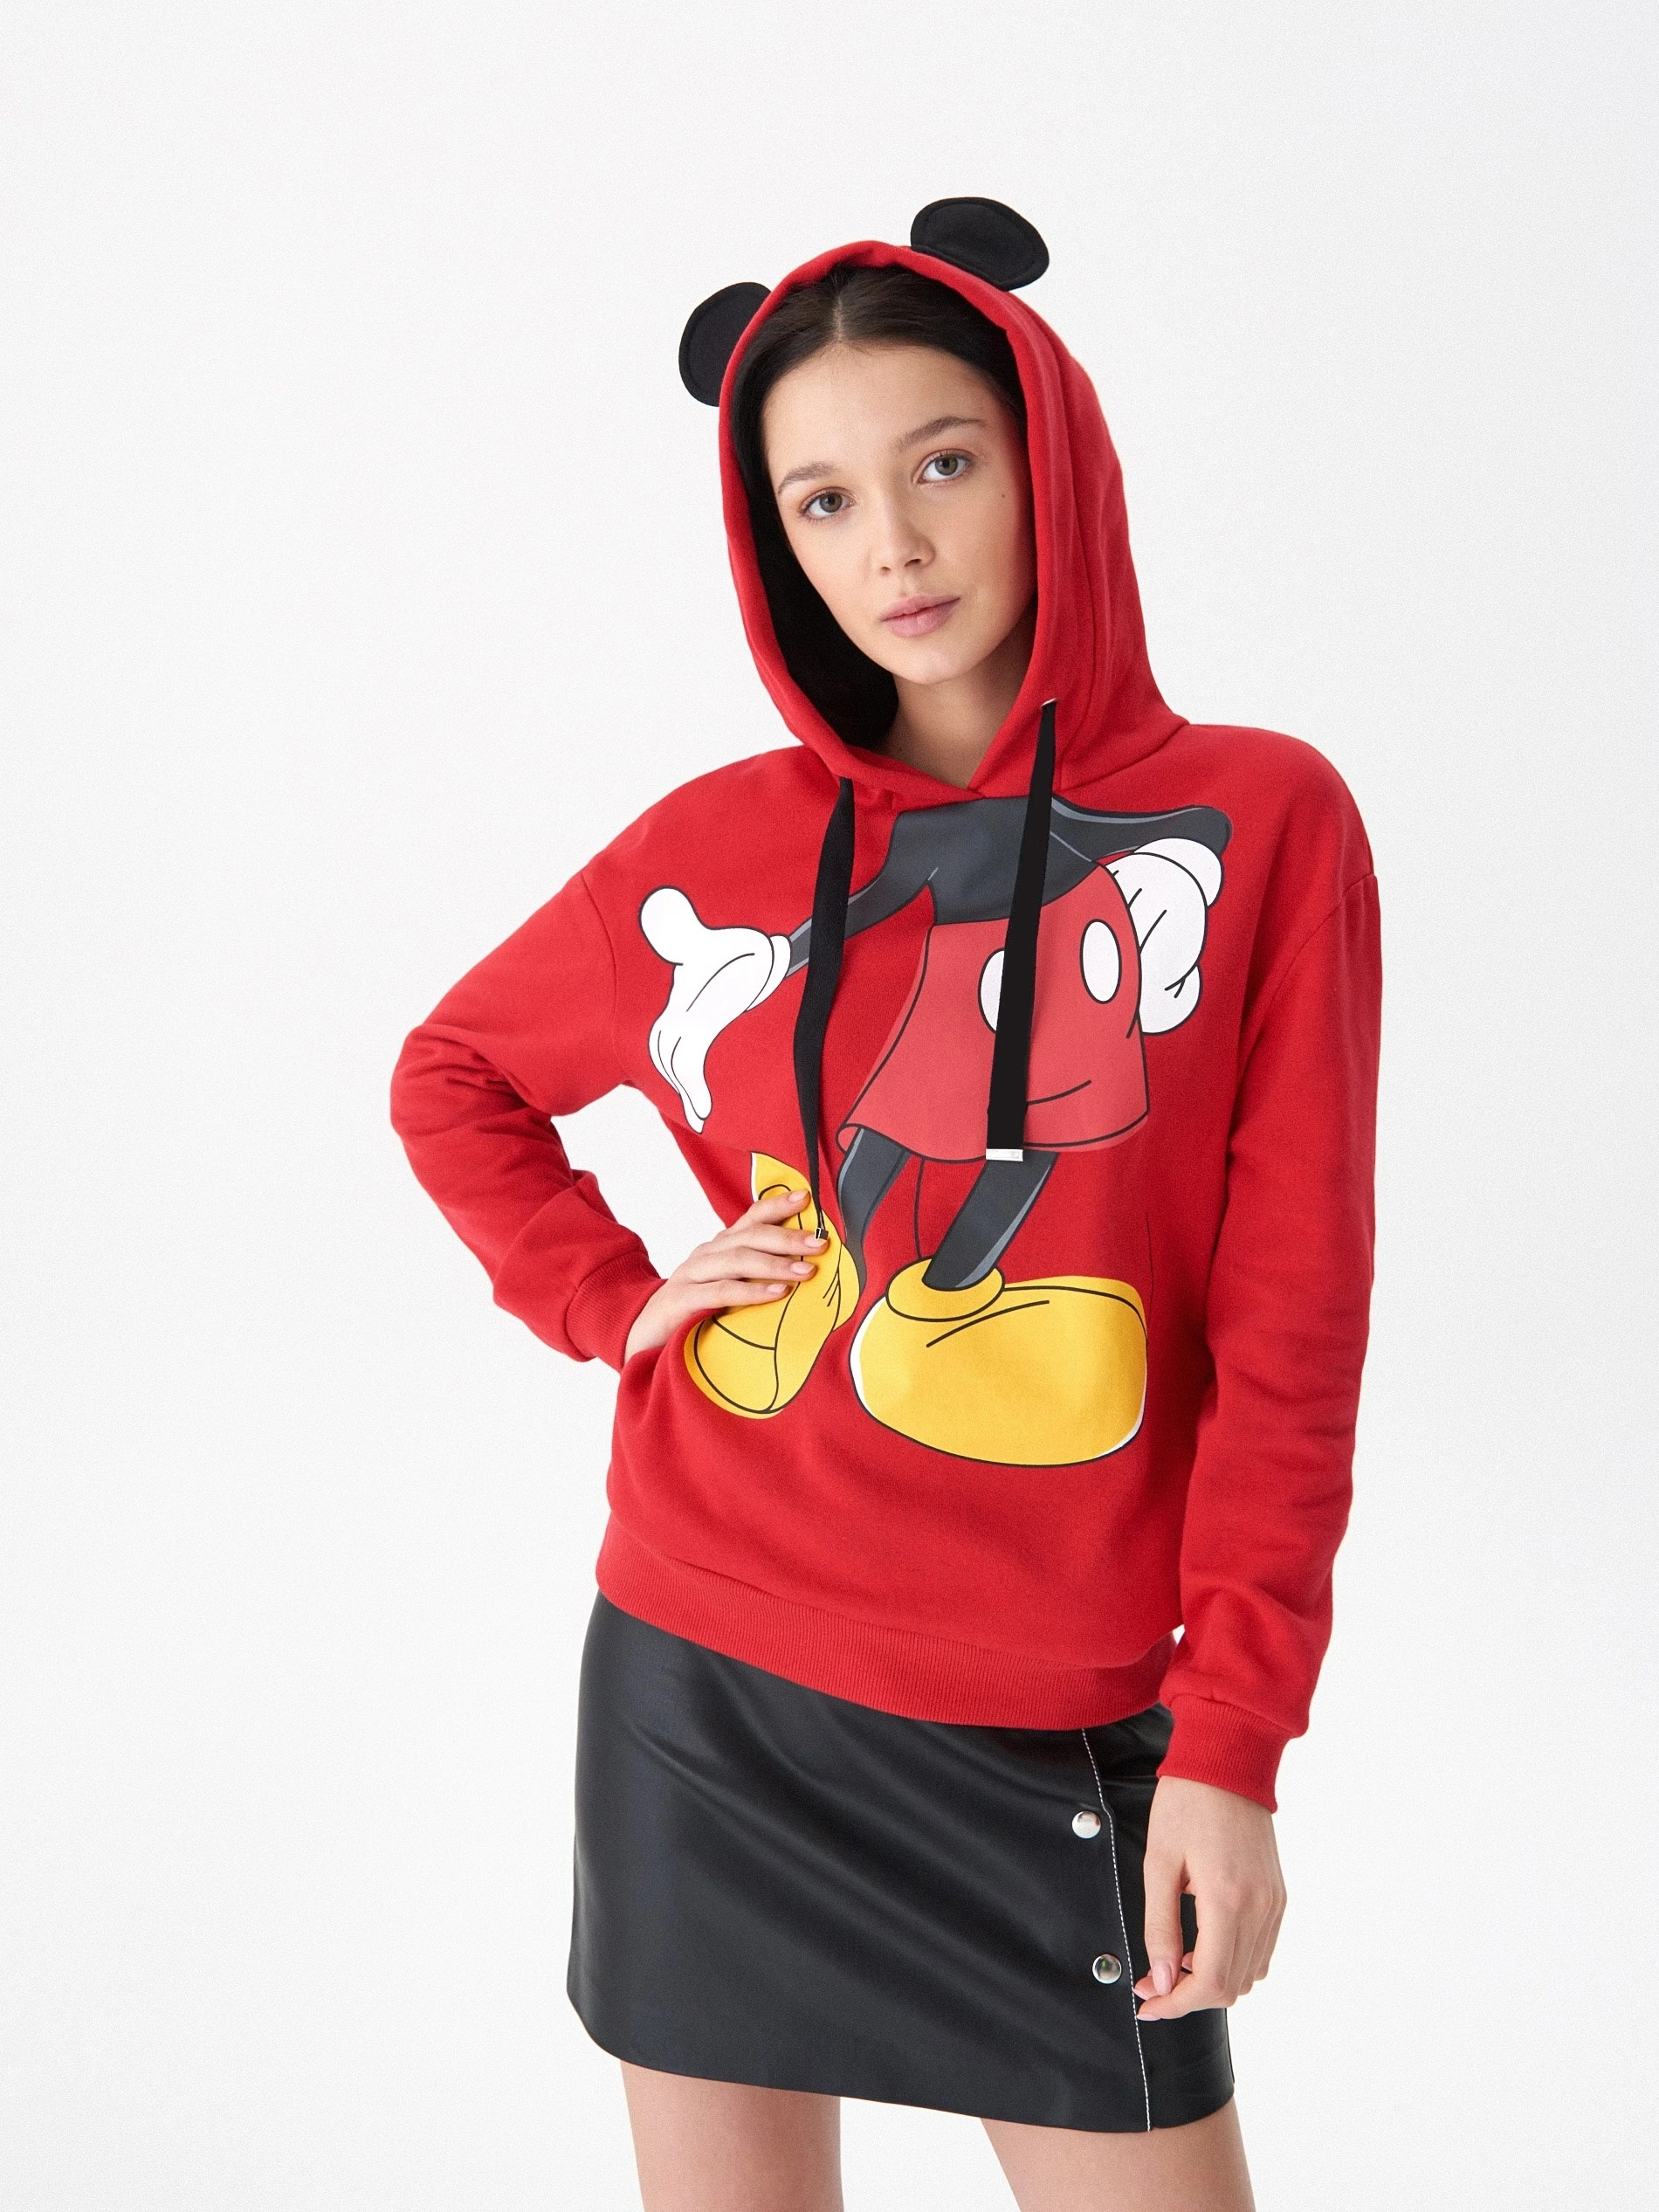 Women Wearing Mickey Mouse Printed logo Red Hoodie